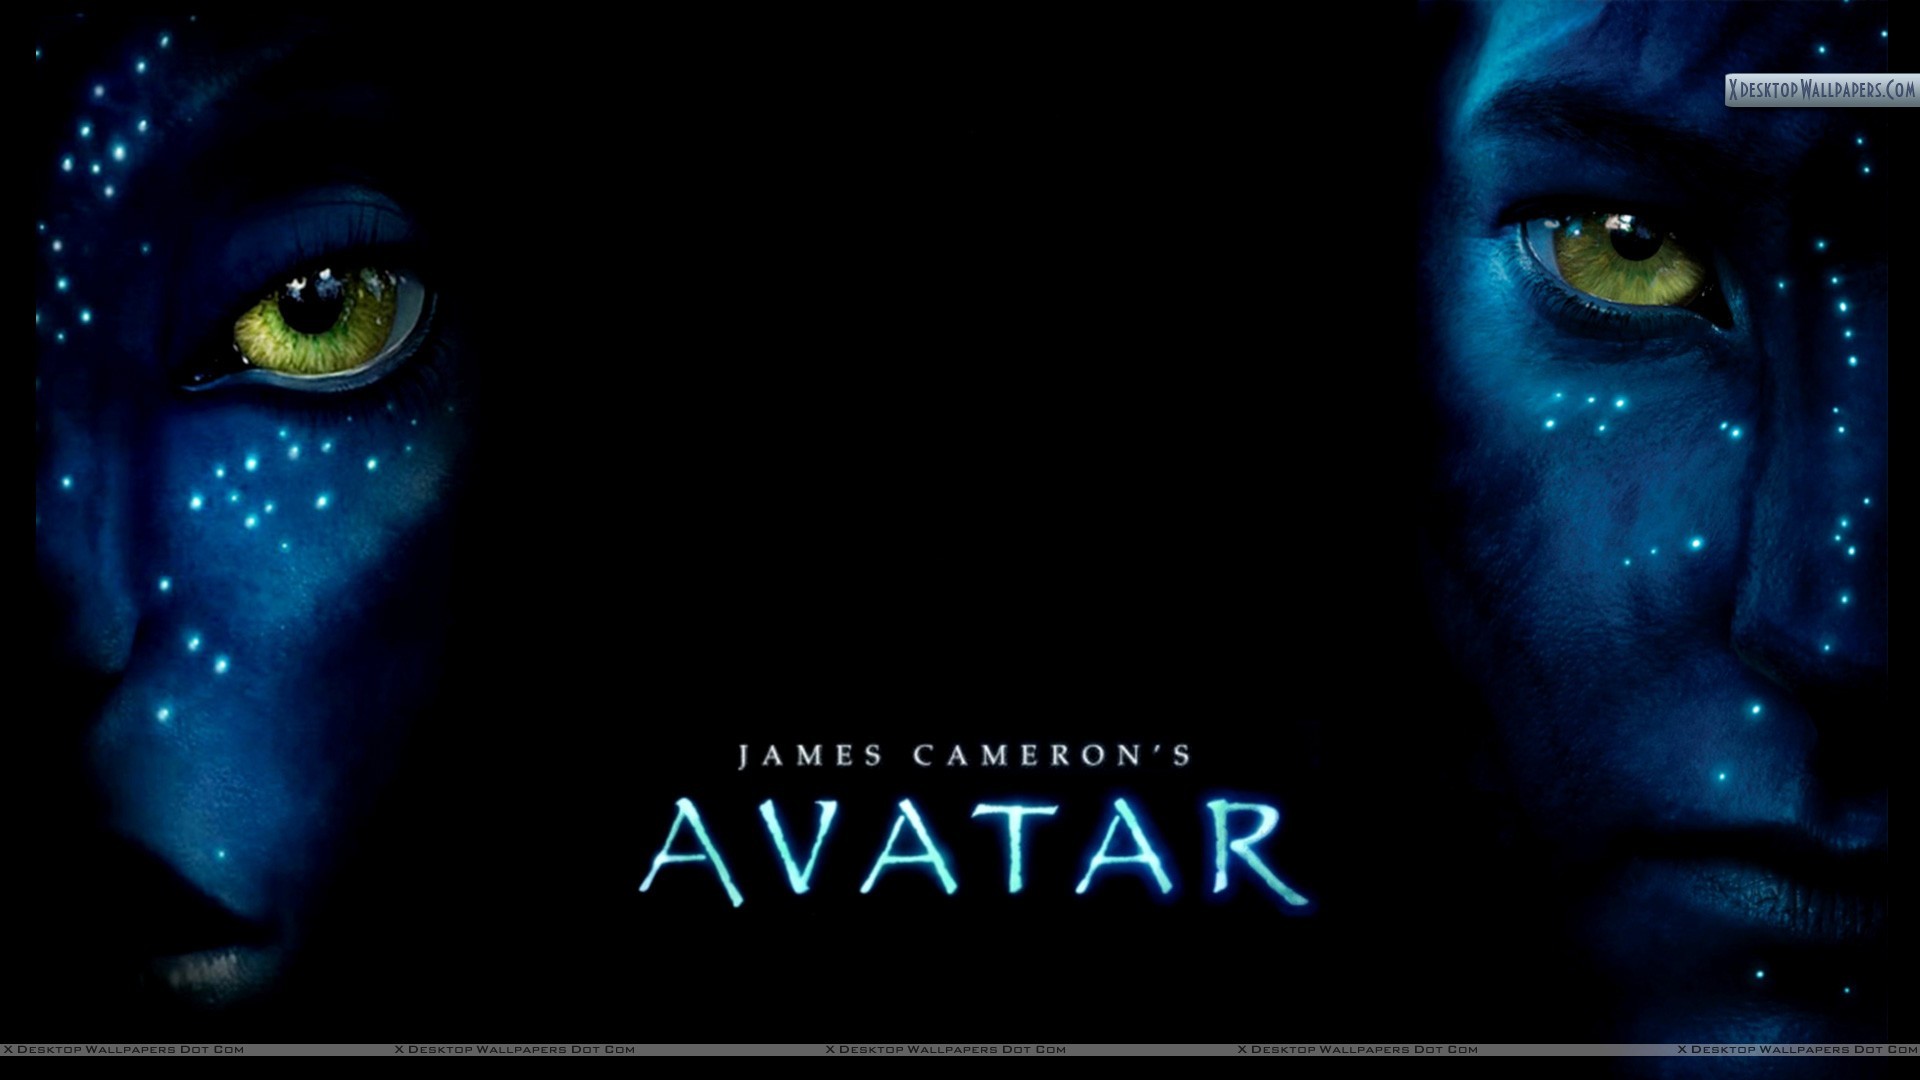 1920x1080 Avatar Movie Poster Wallpaper